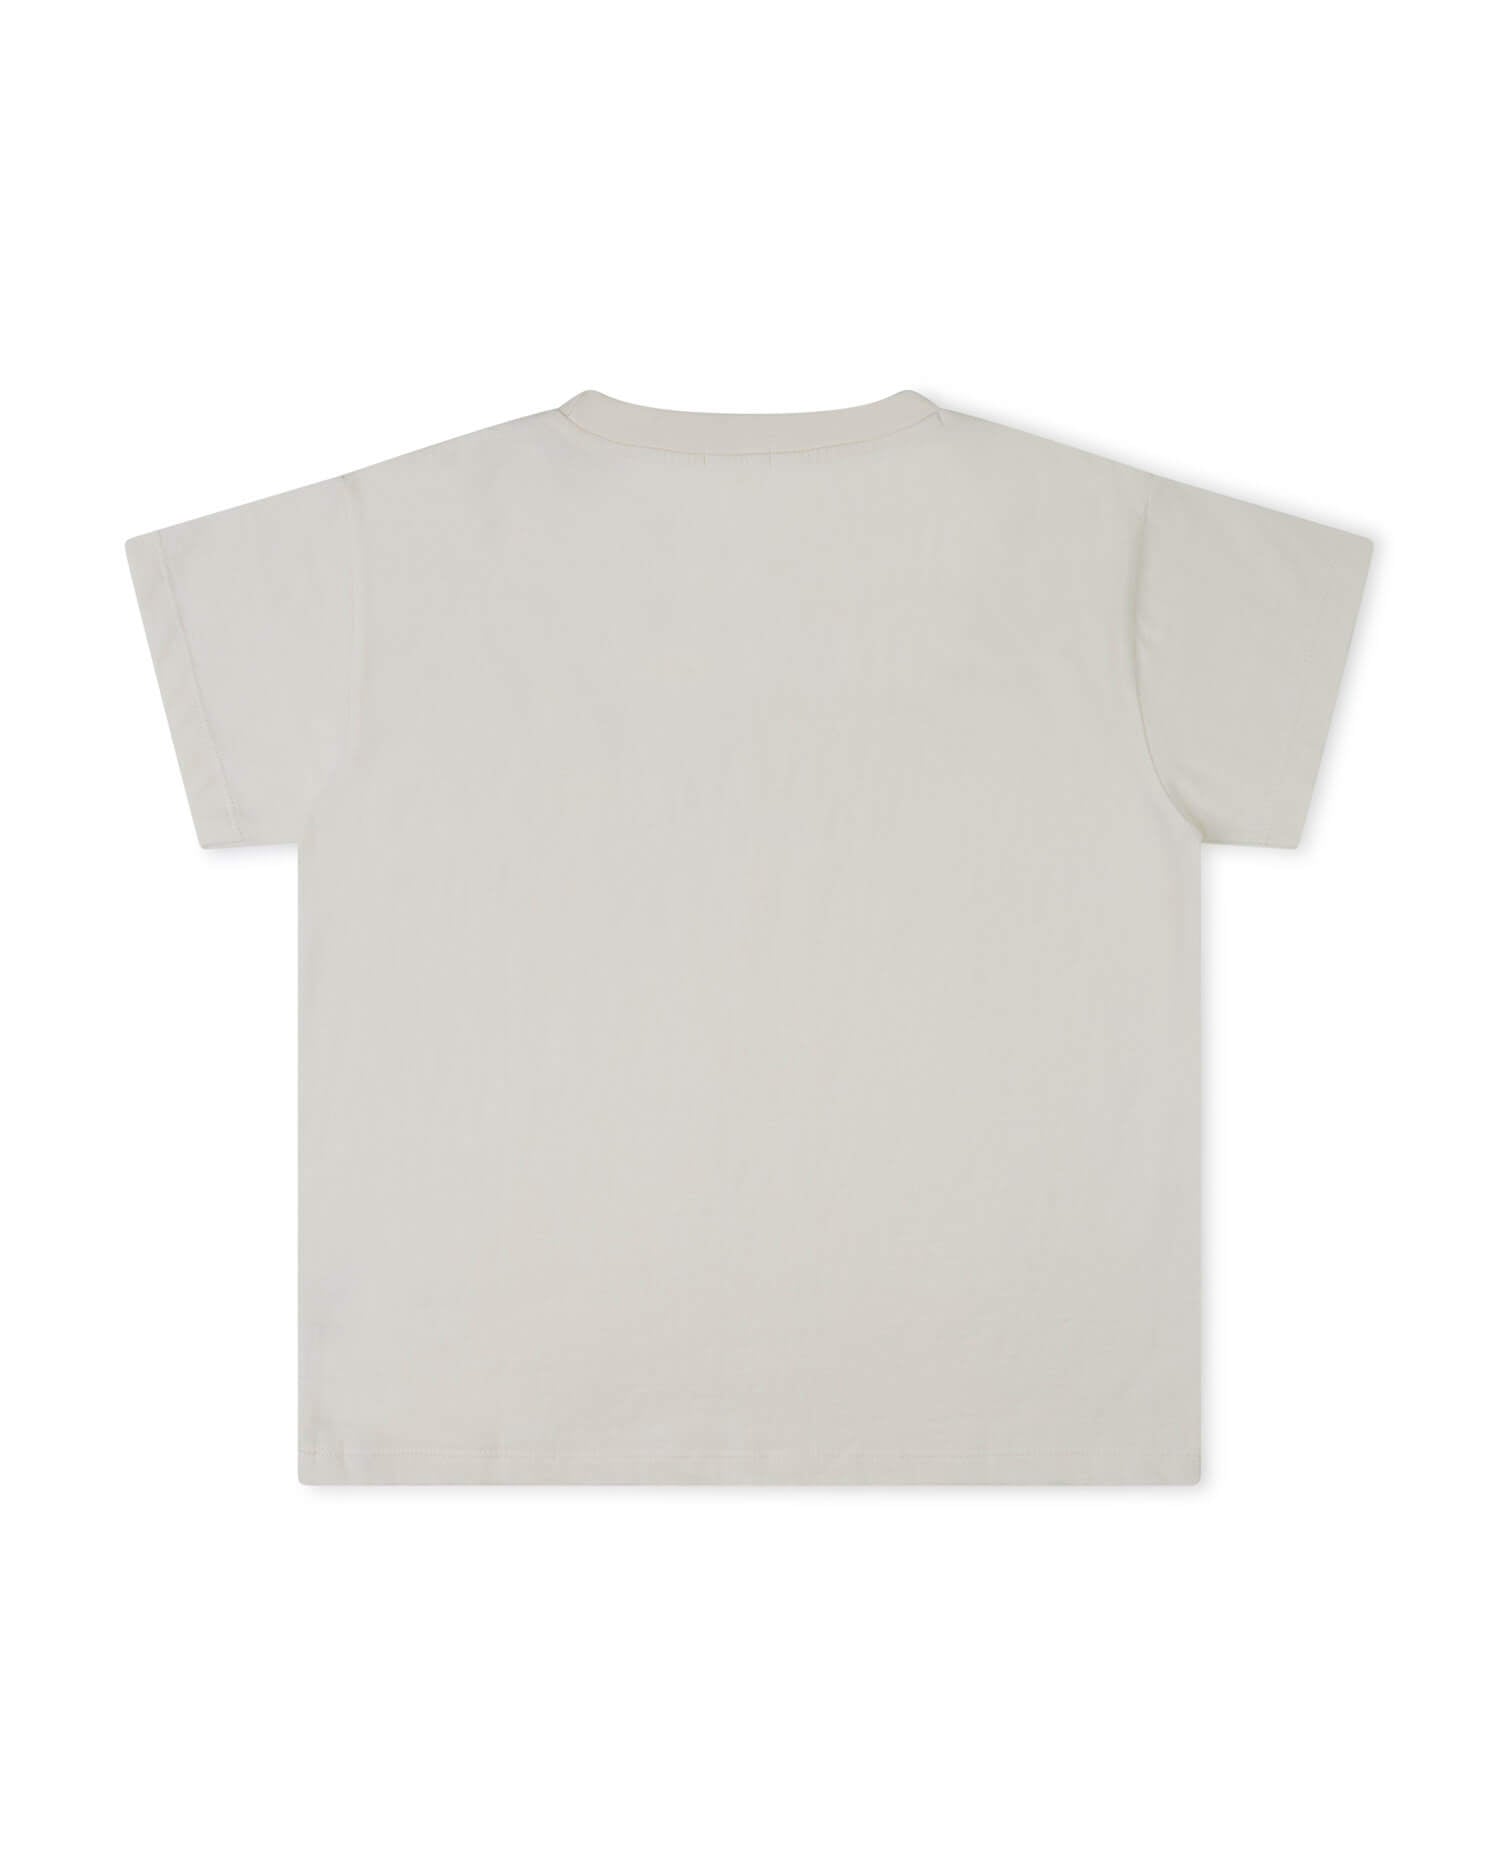 T-shirt essentiel blanc en coton 100% biologique de Matona